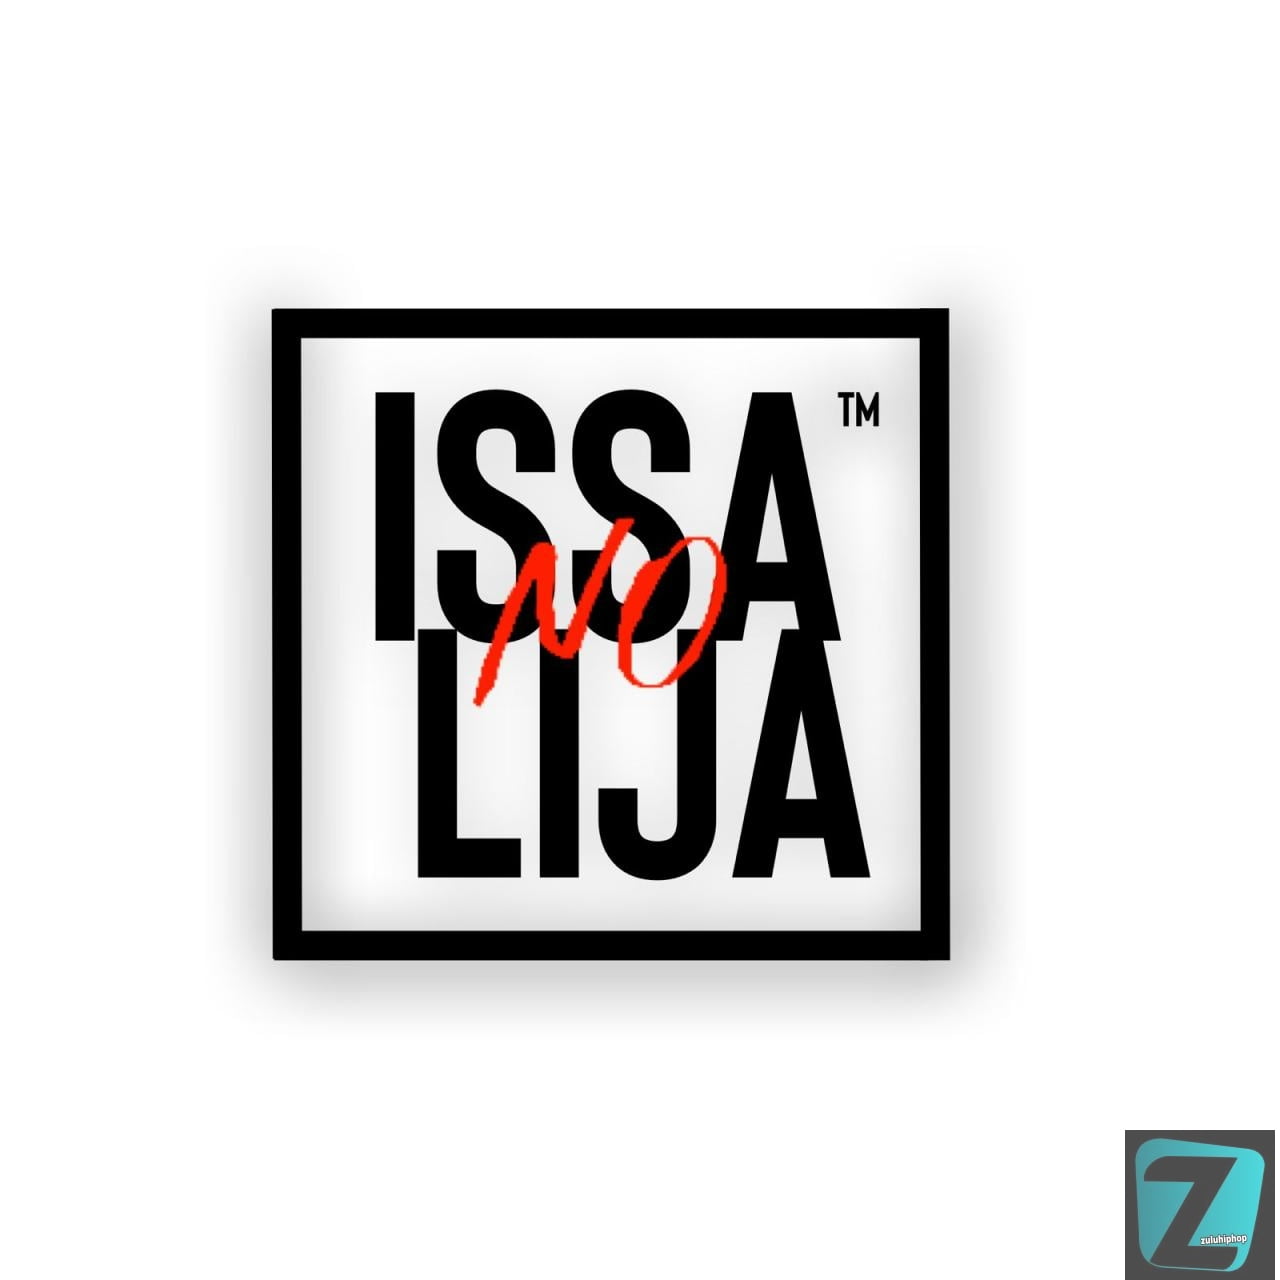 Issa no Lija – No More Pain